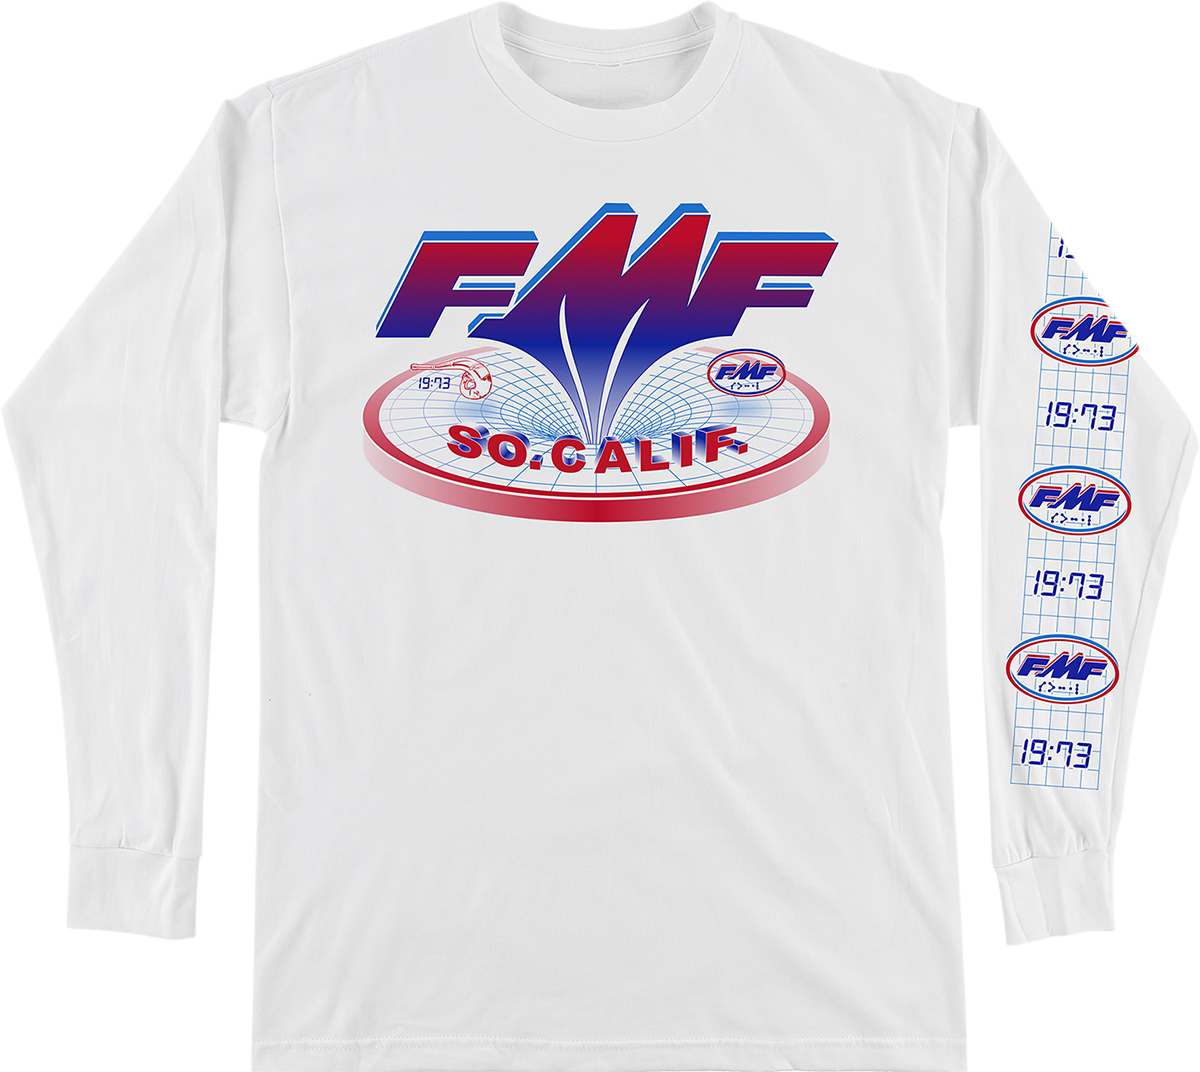 FMF Black Hole Long-Sleeve T-Shirt - White - Medium FA21119900WHMD 3030-21323